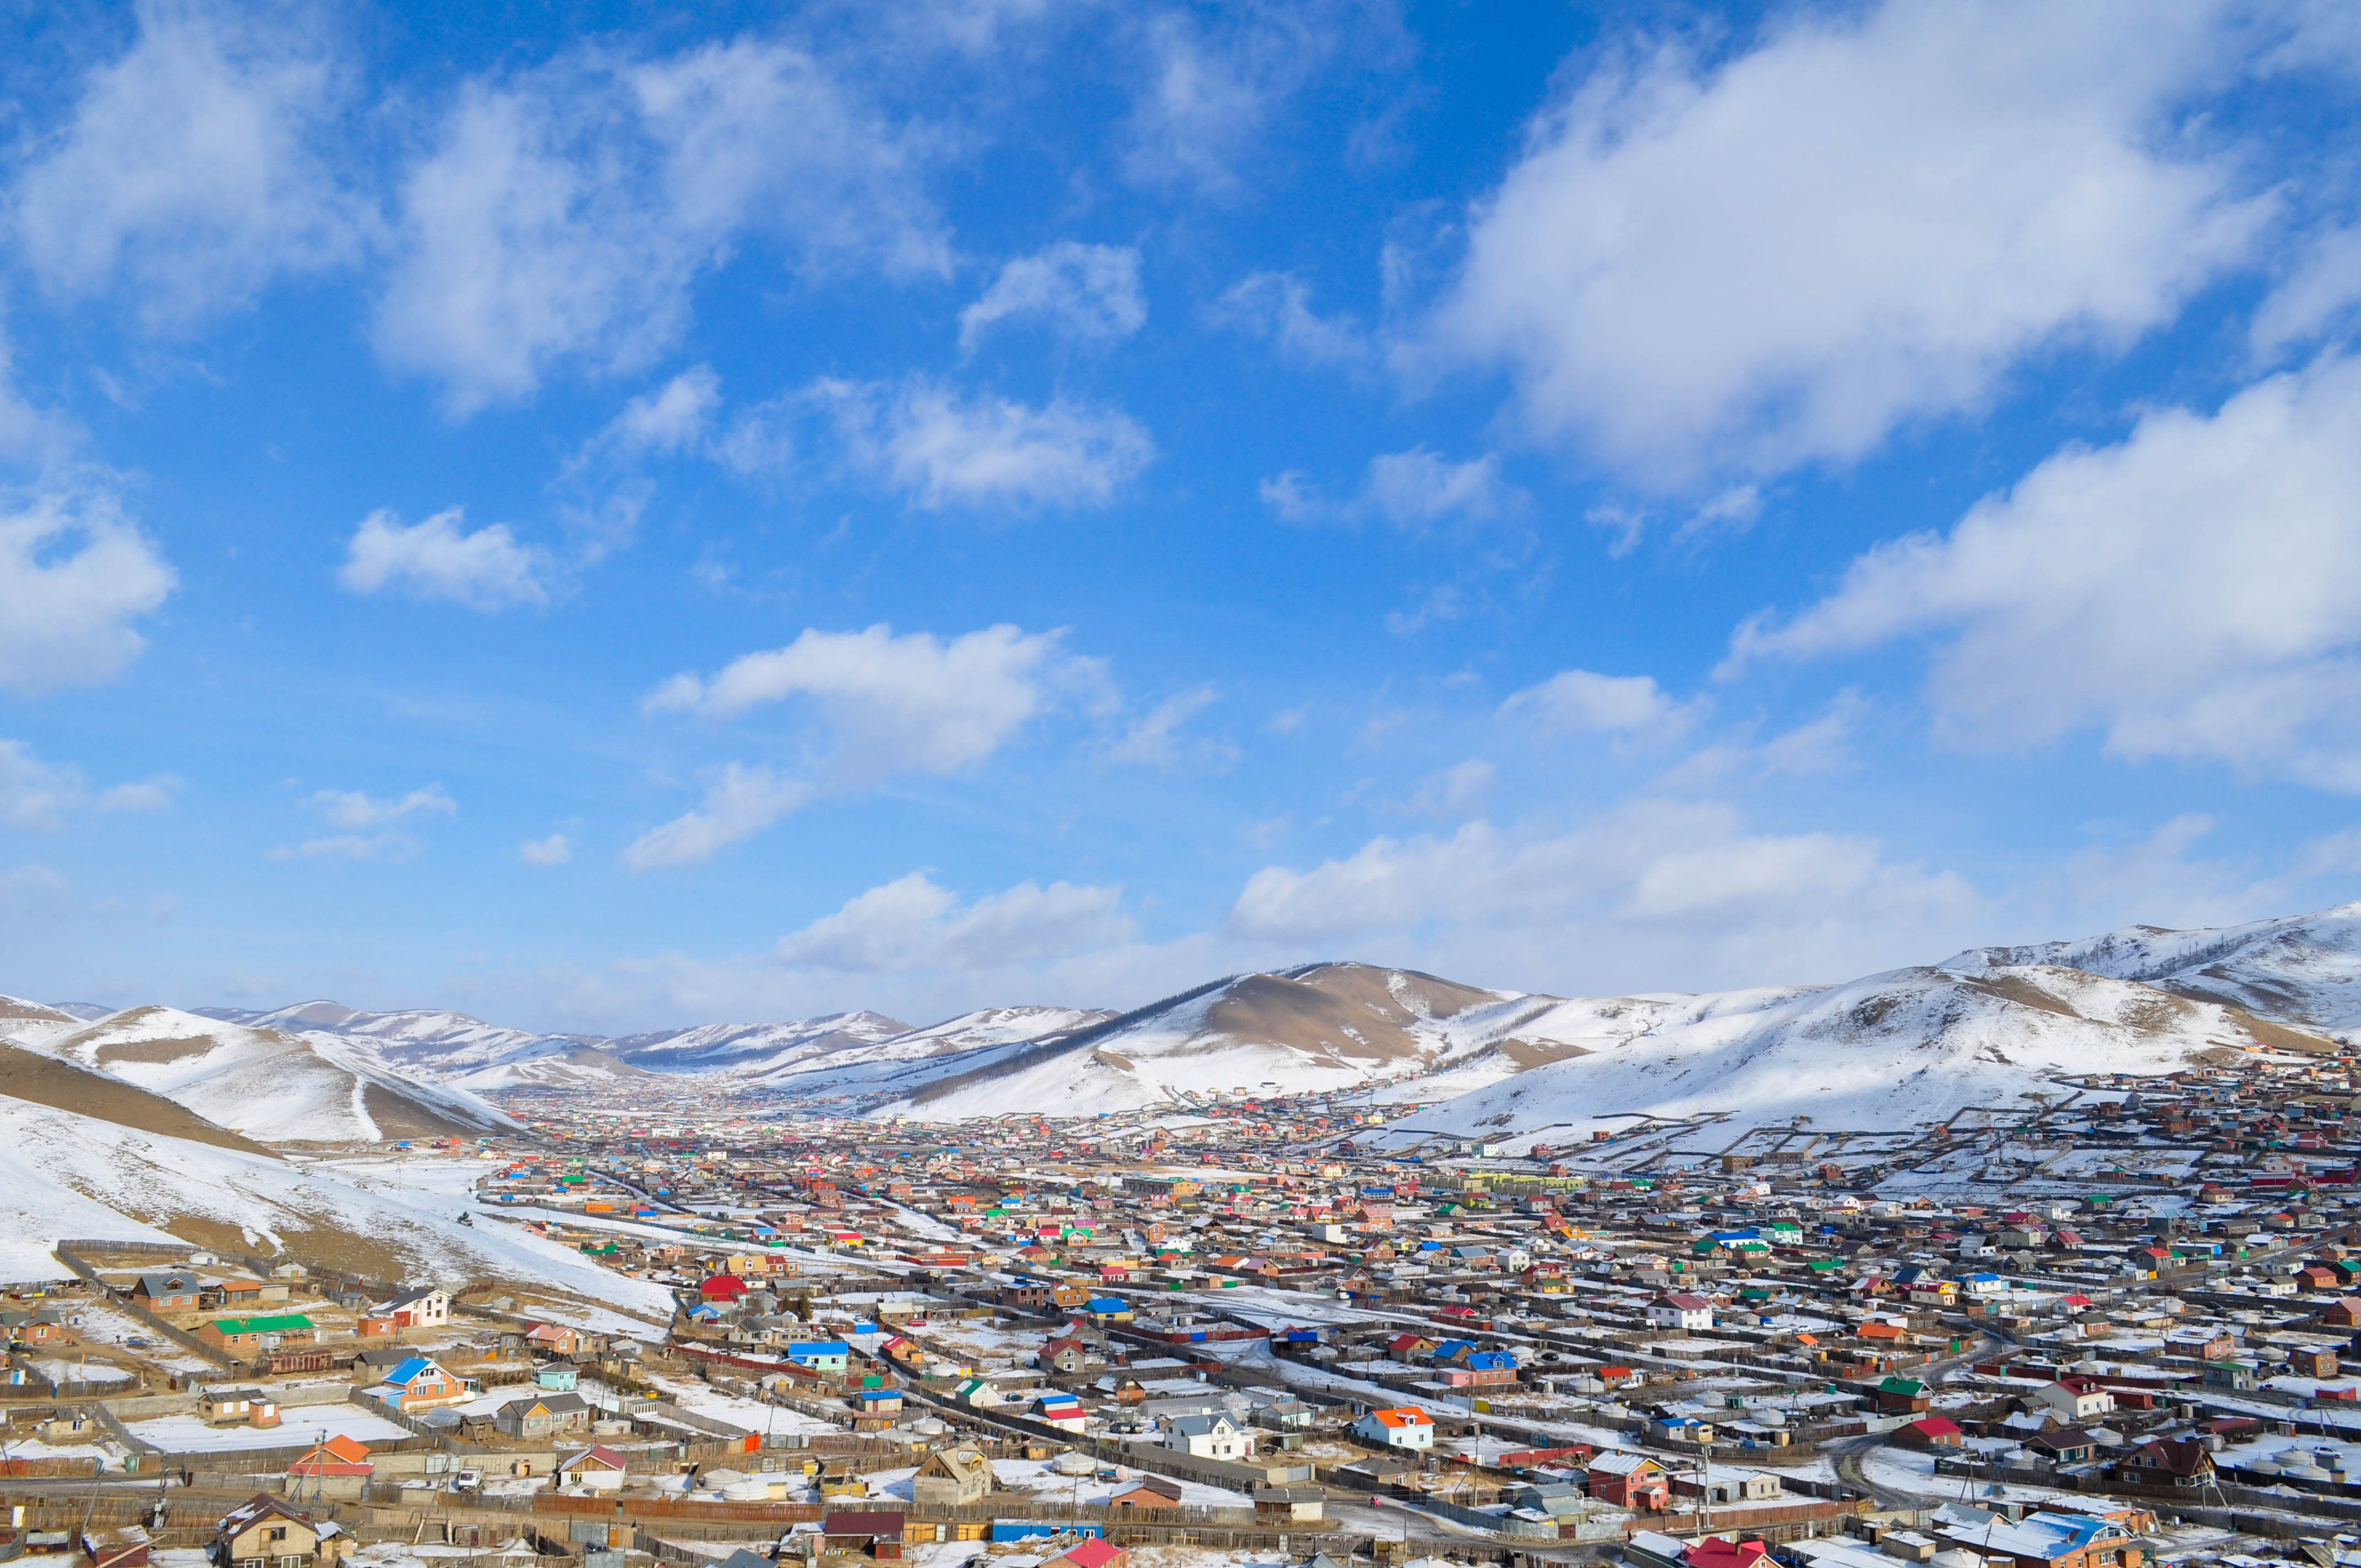 A suburb of the Mongolian capital Ulan Bator